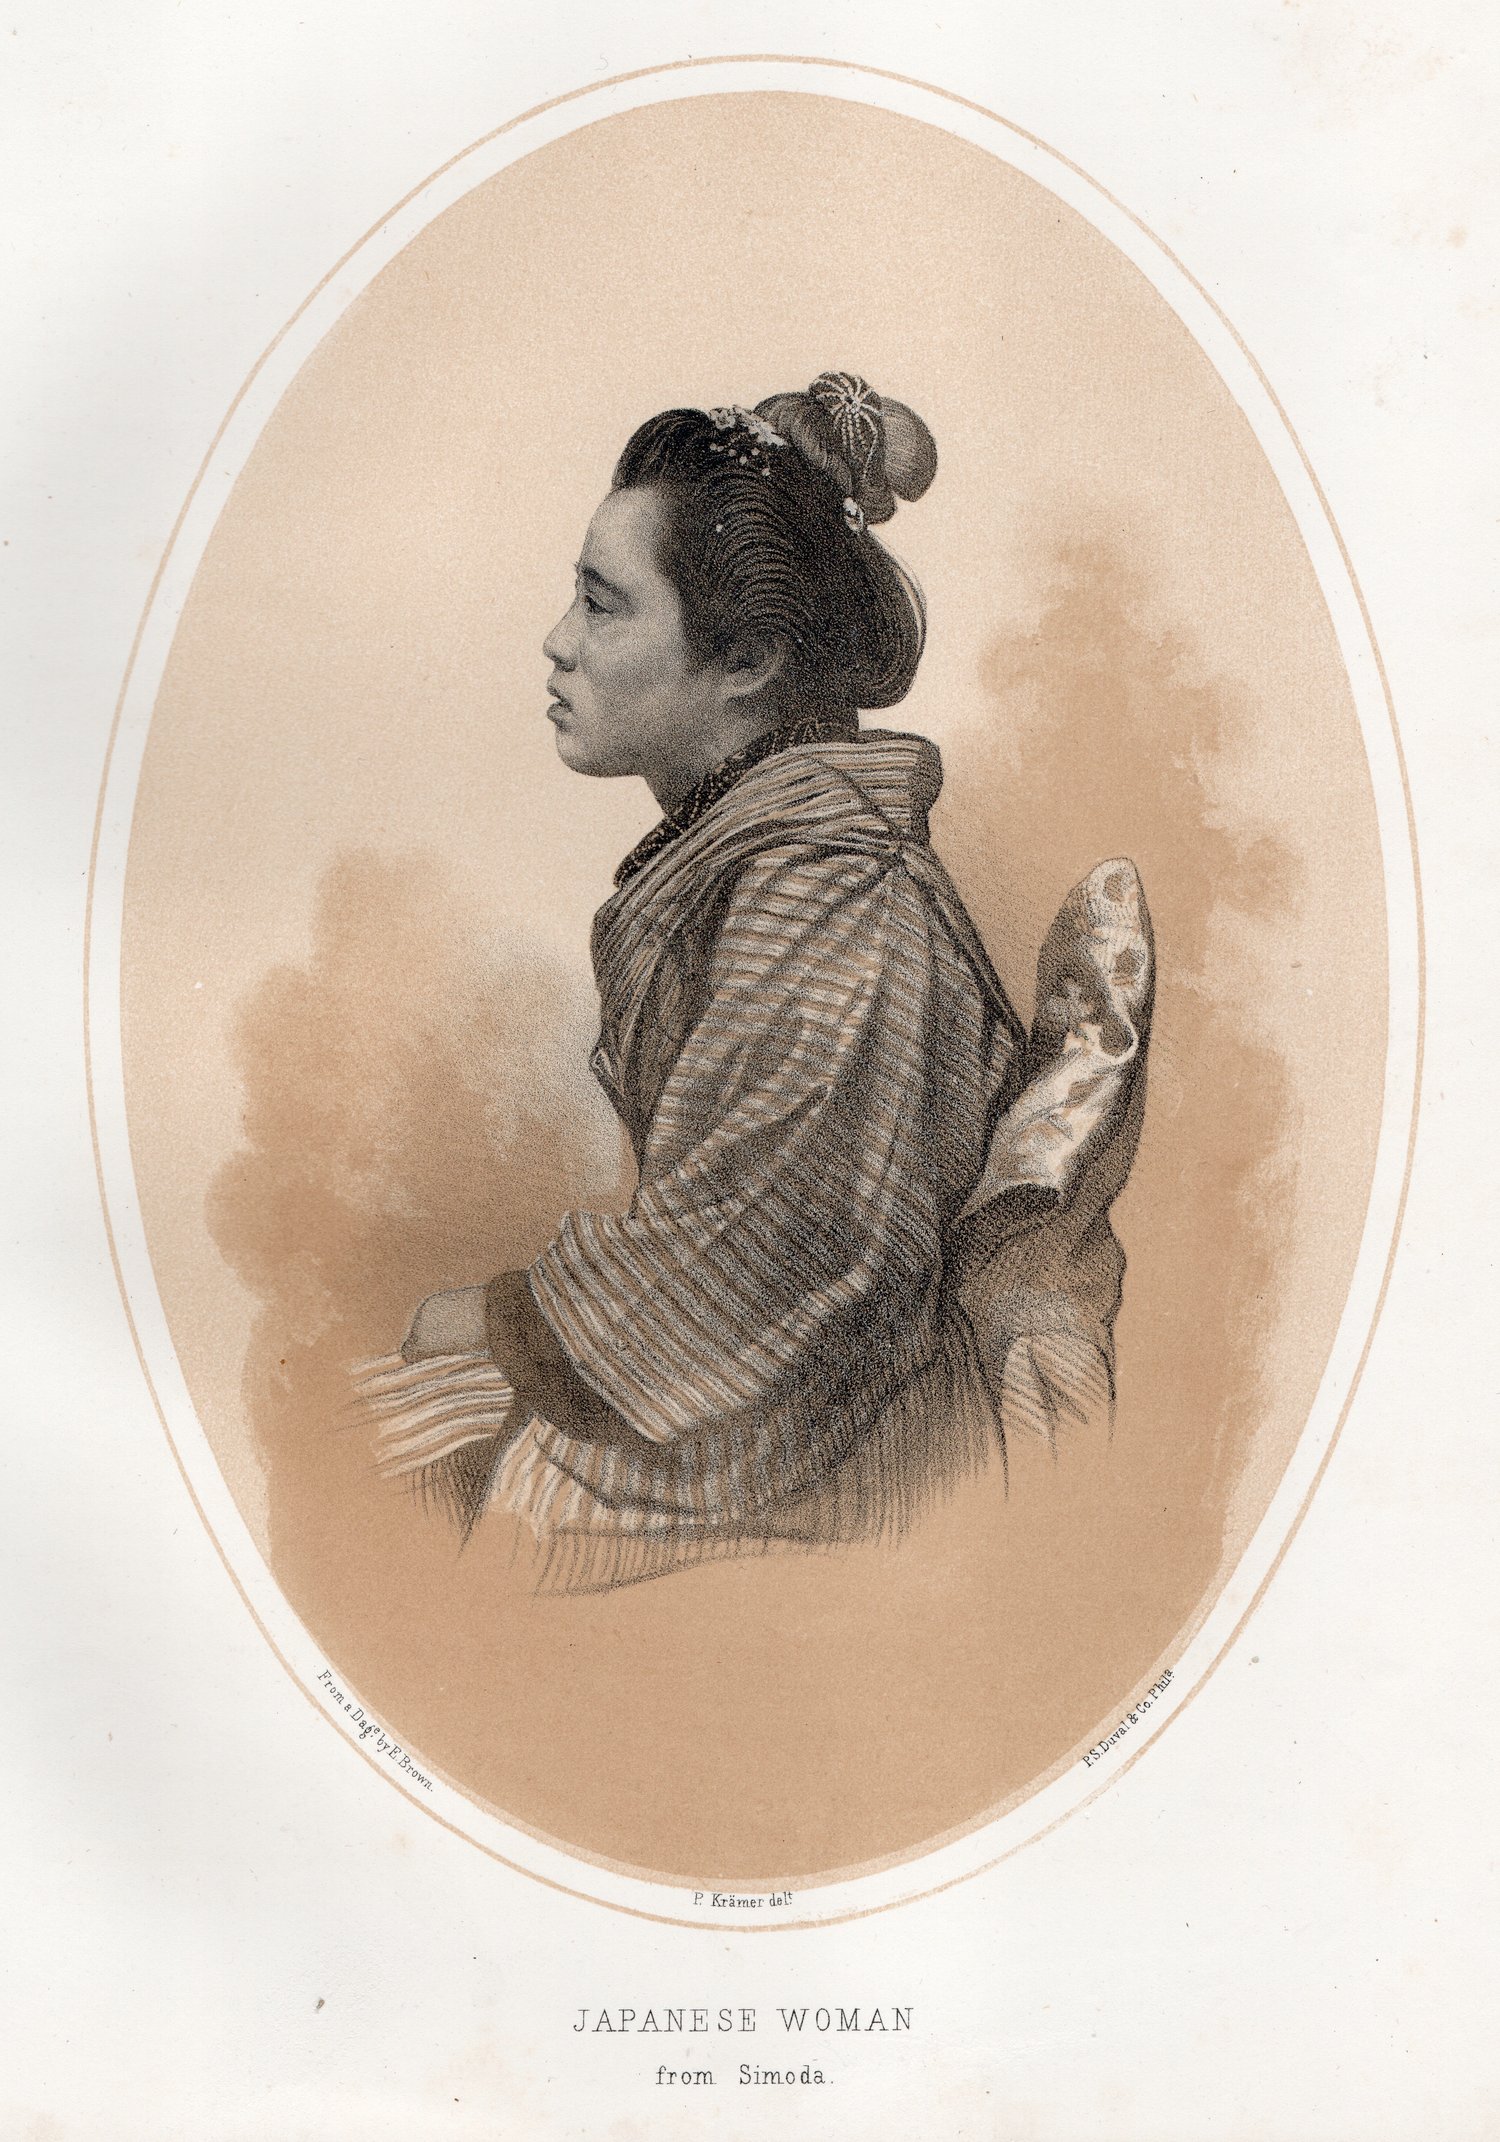 Image of E. Brown Jr.: Japanese Woman from Simoda, Japan ca. 1856